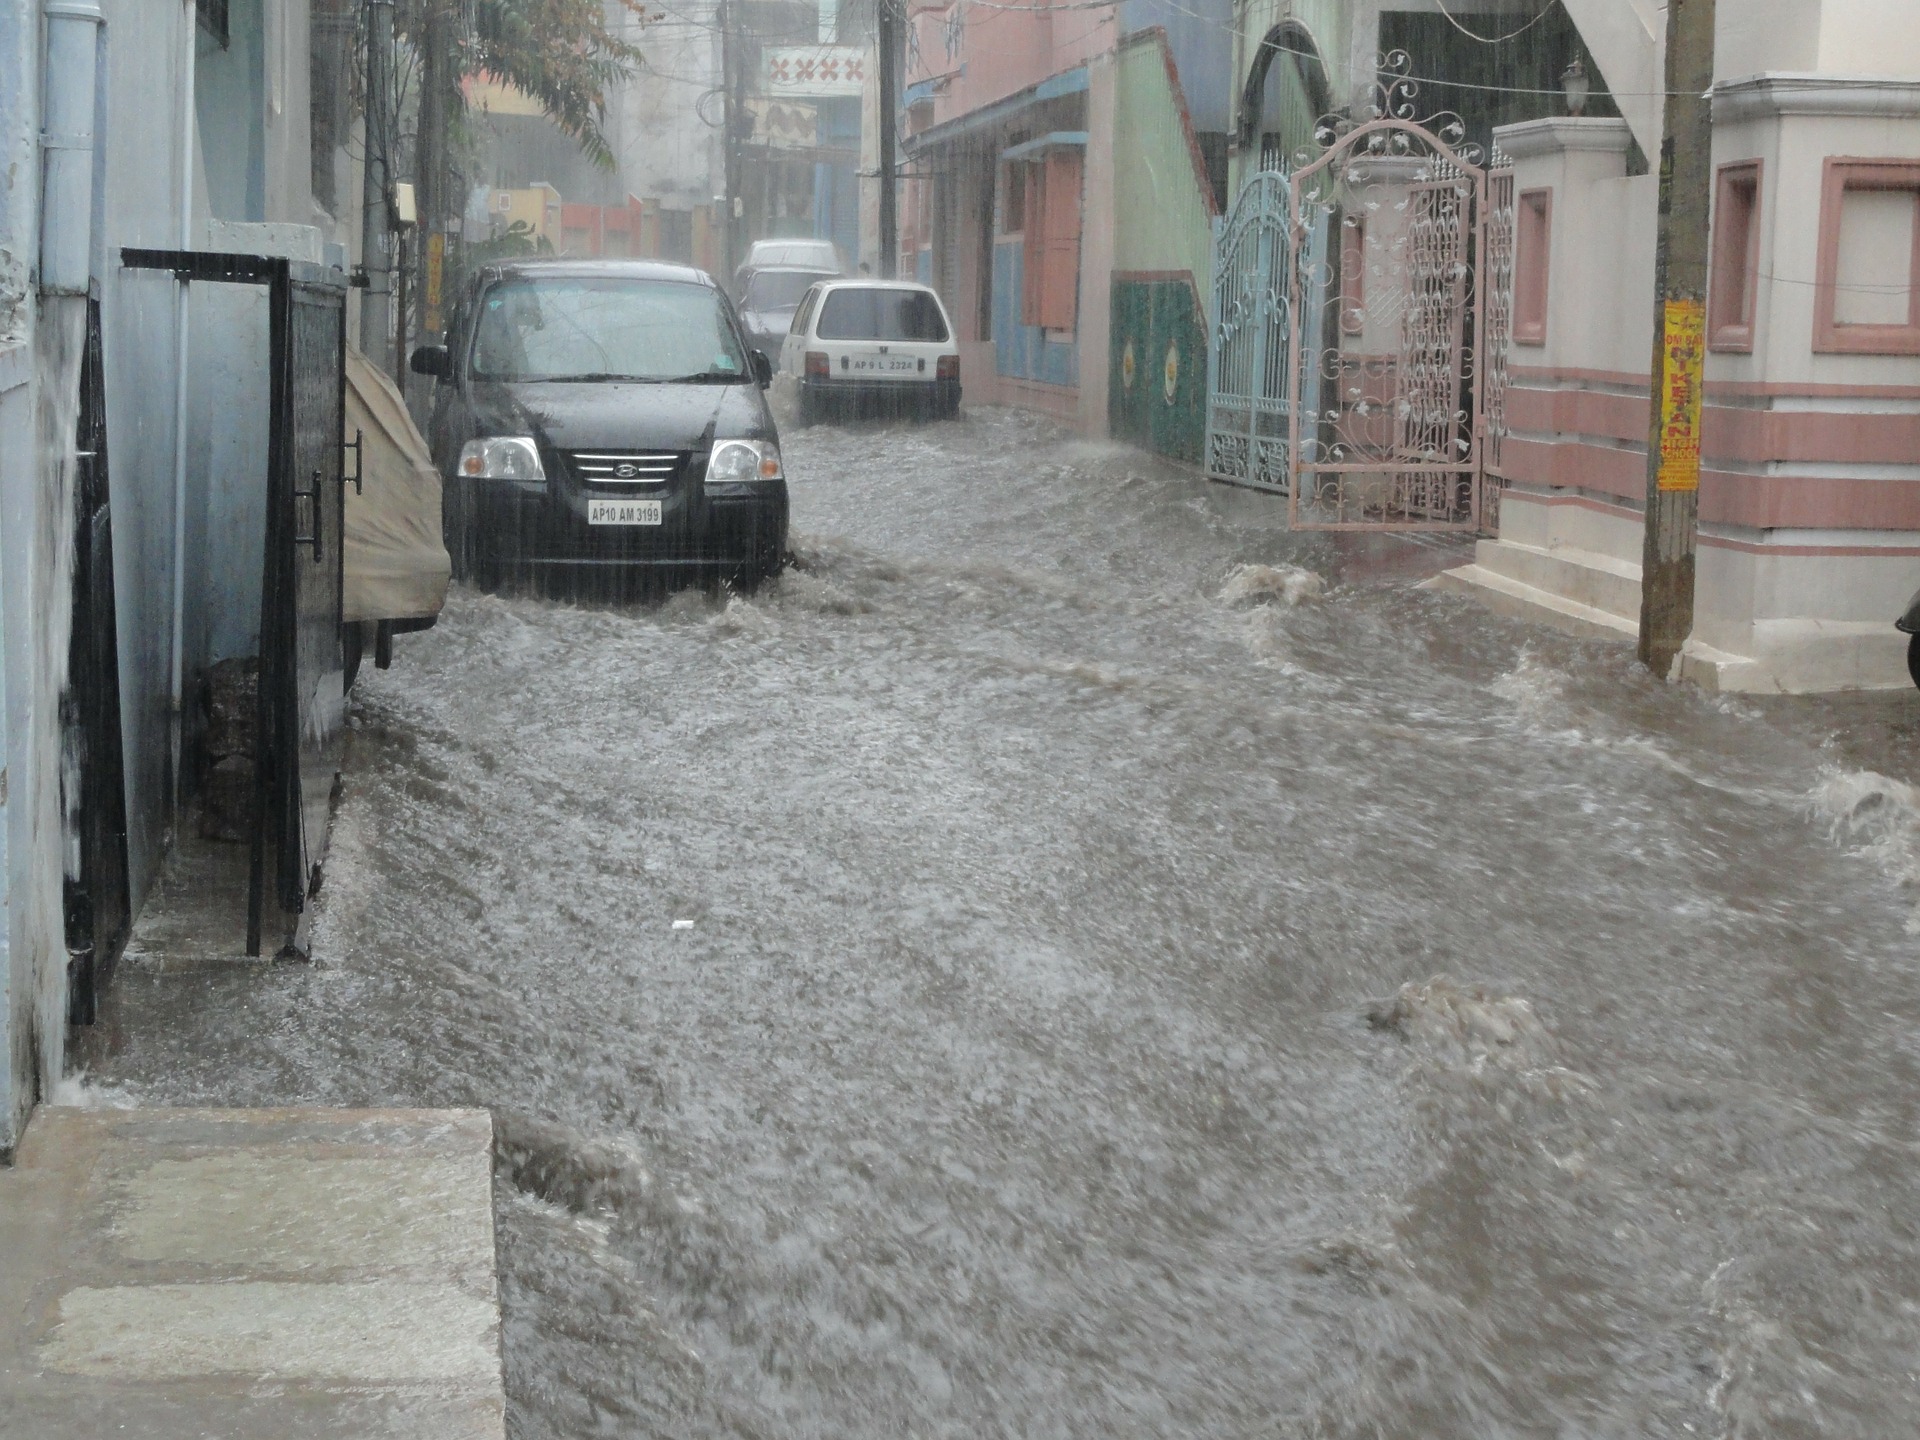 HAOS U ŠPANIJI Olujna kiša izazvala poplave, bujice nosile auta, hiljade ljudi bez struje (VIDEO)